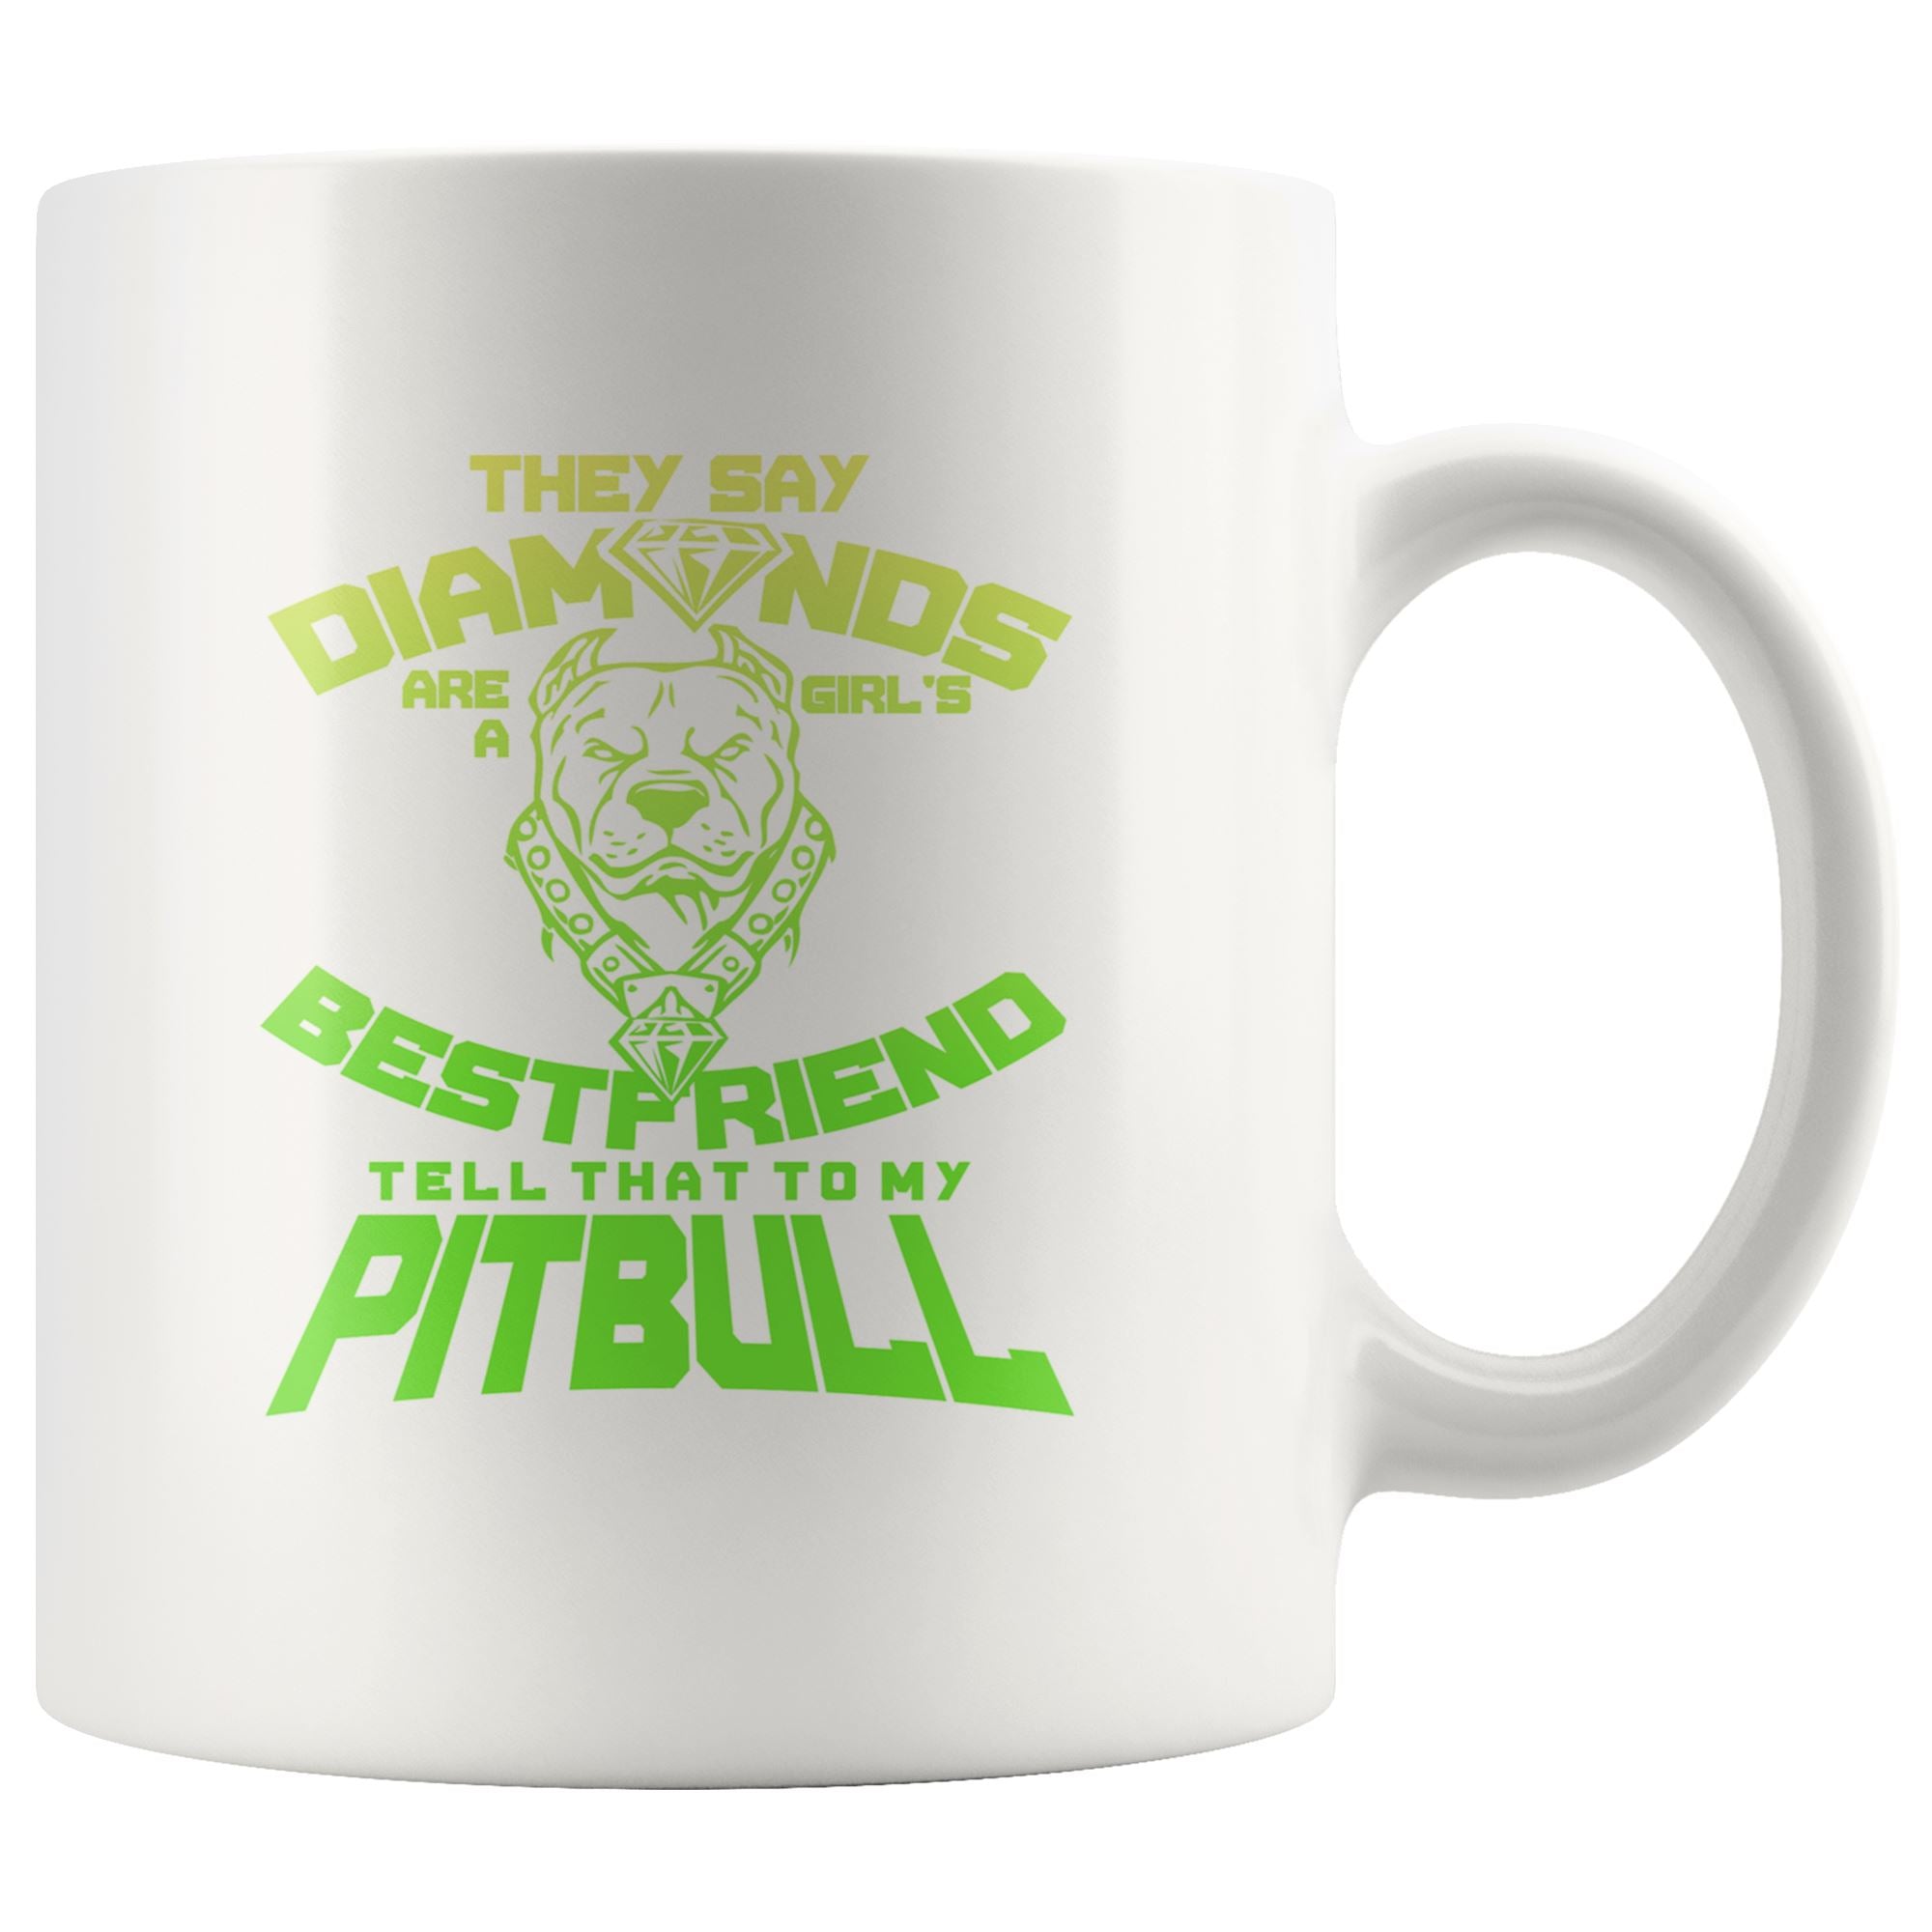 Diamonds & Pitbulls Drinkware teelaunch 11oz Mug 